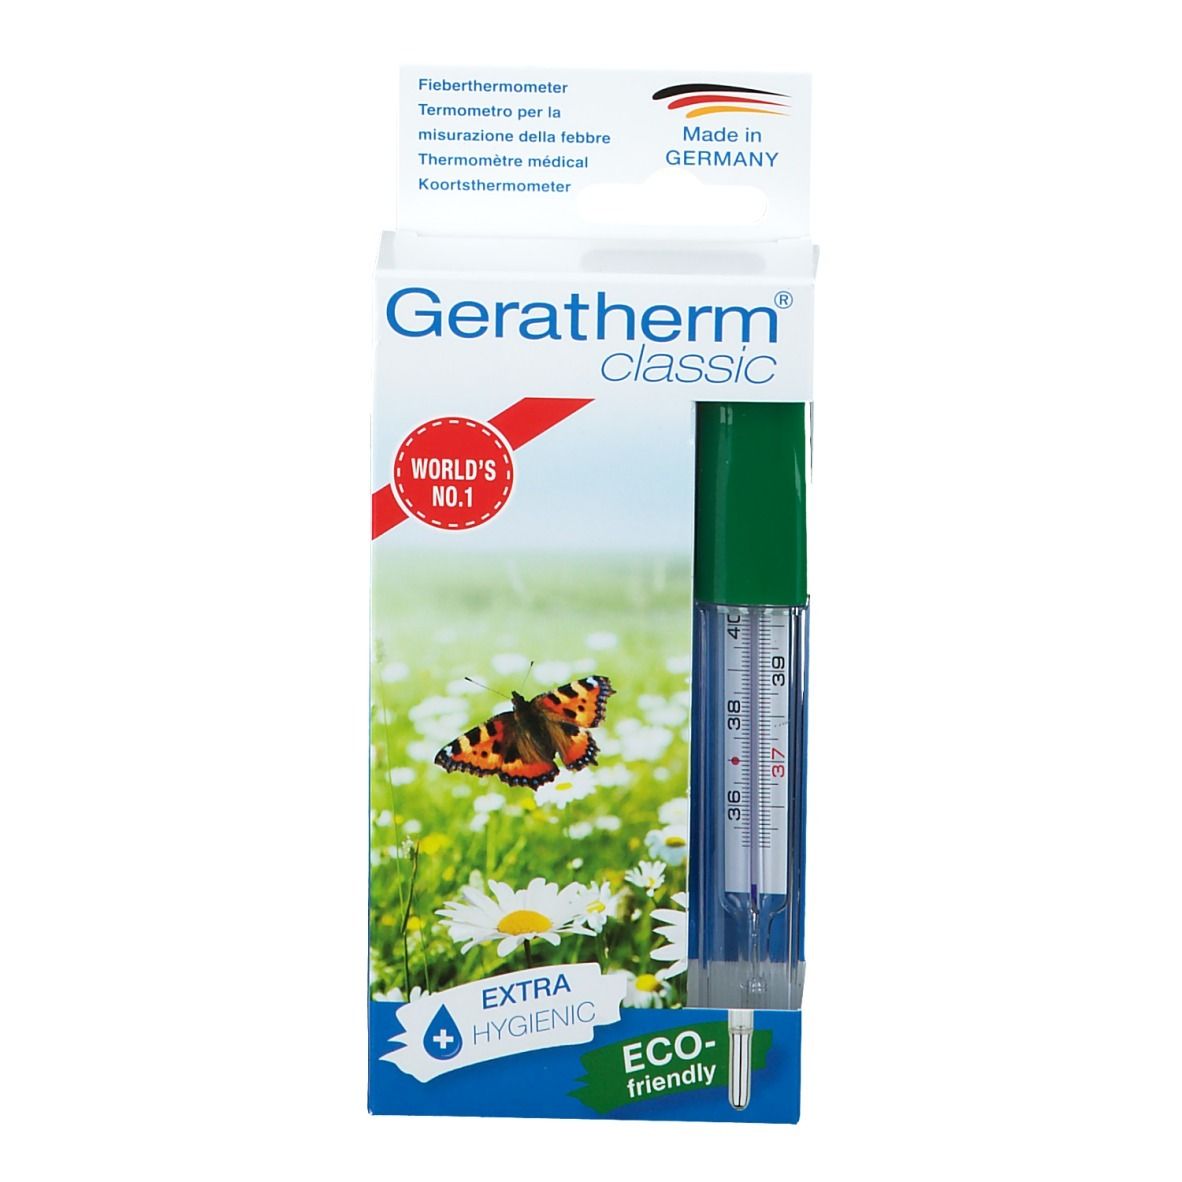 Geratherm® classic + easy flip